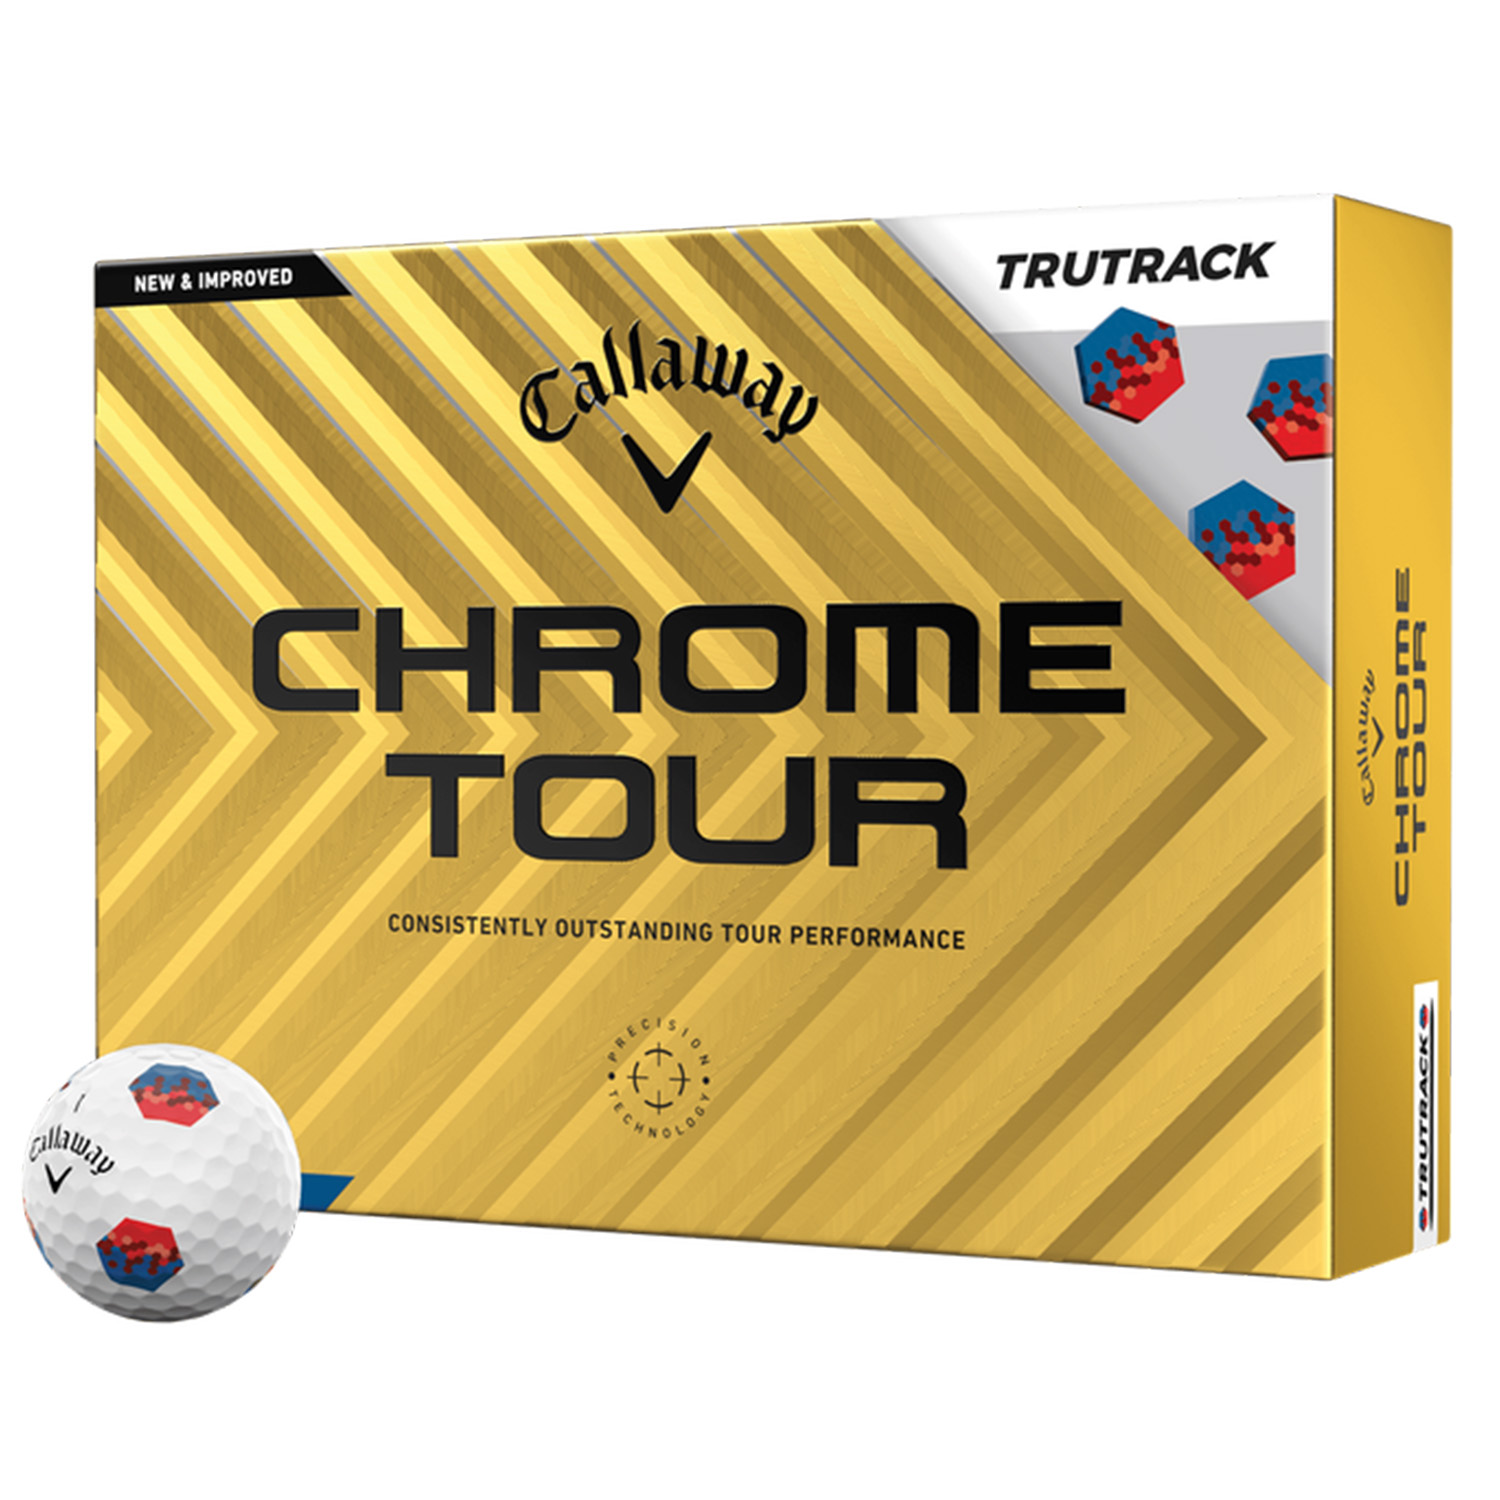 Callaway Chrome Tour Tru Track Golf Balls